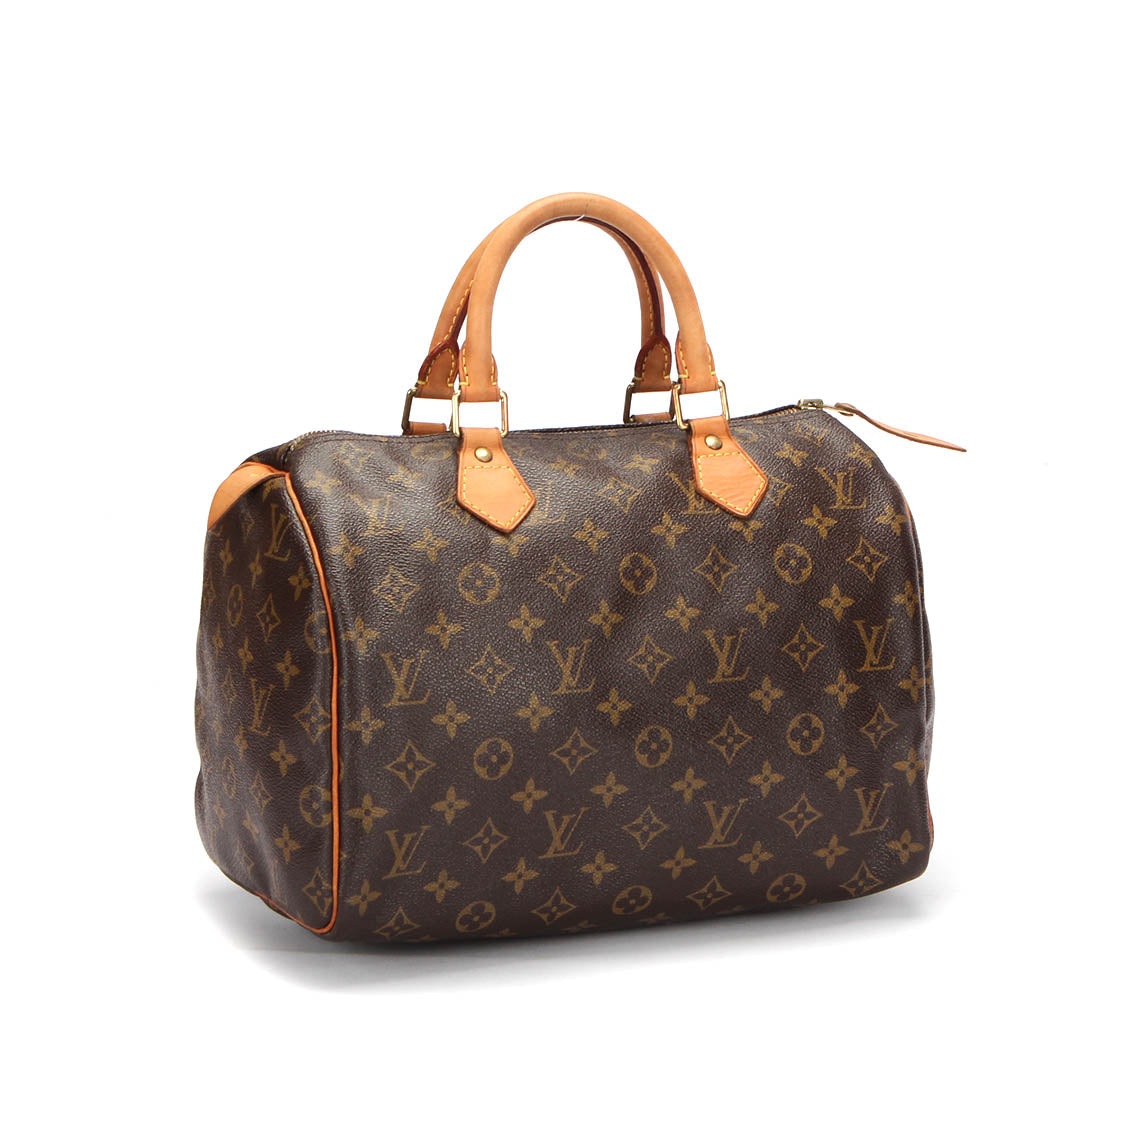 Louis Vuitton Monogram Canvas Speedy 30 Canvas Handbag M41526 in Good condition